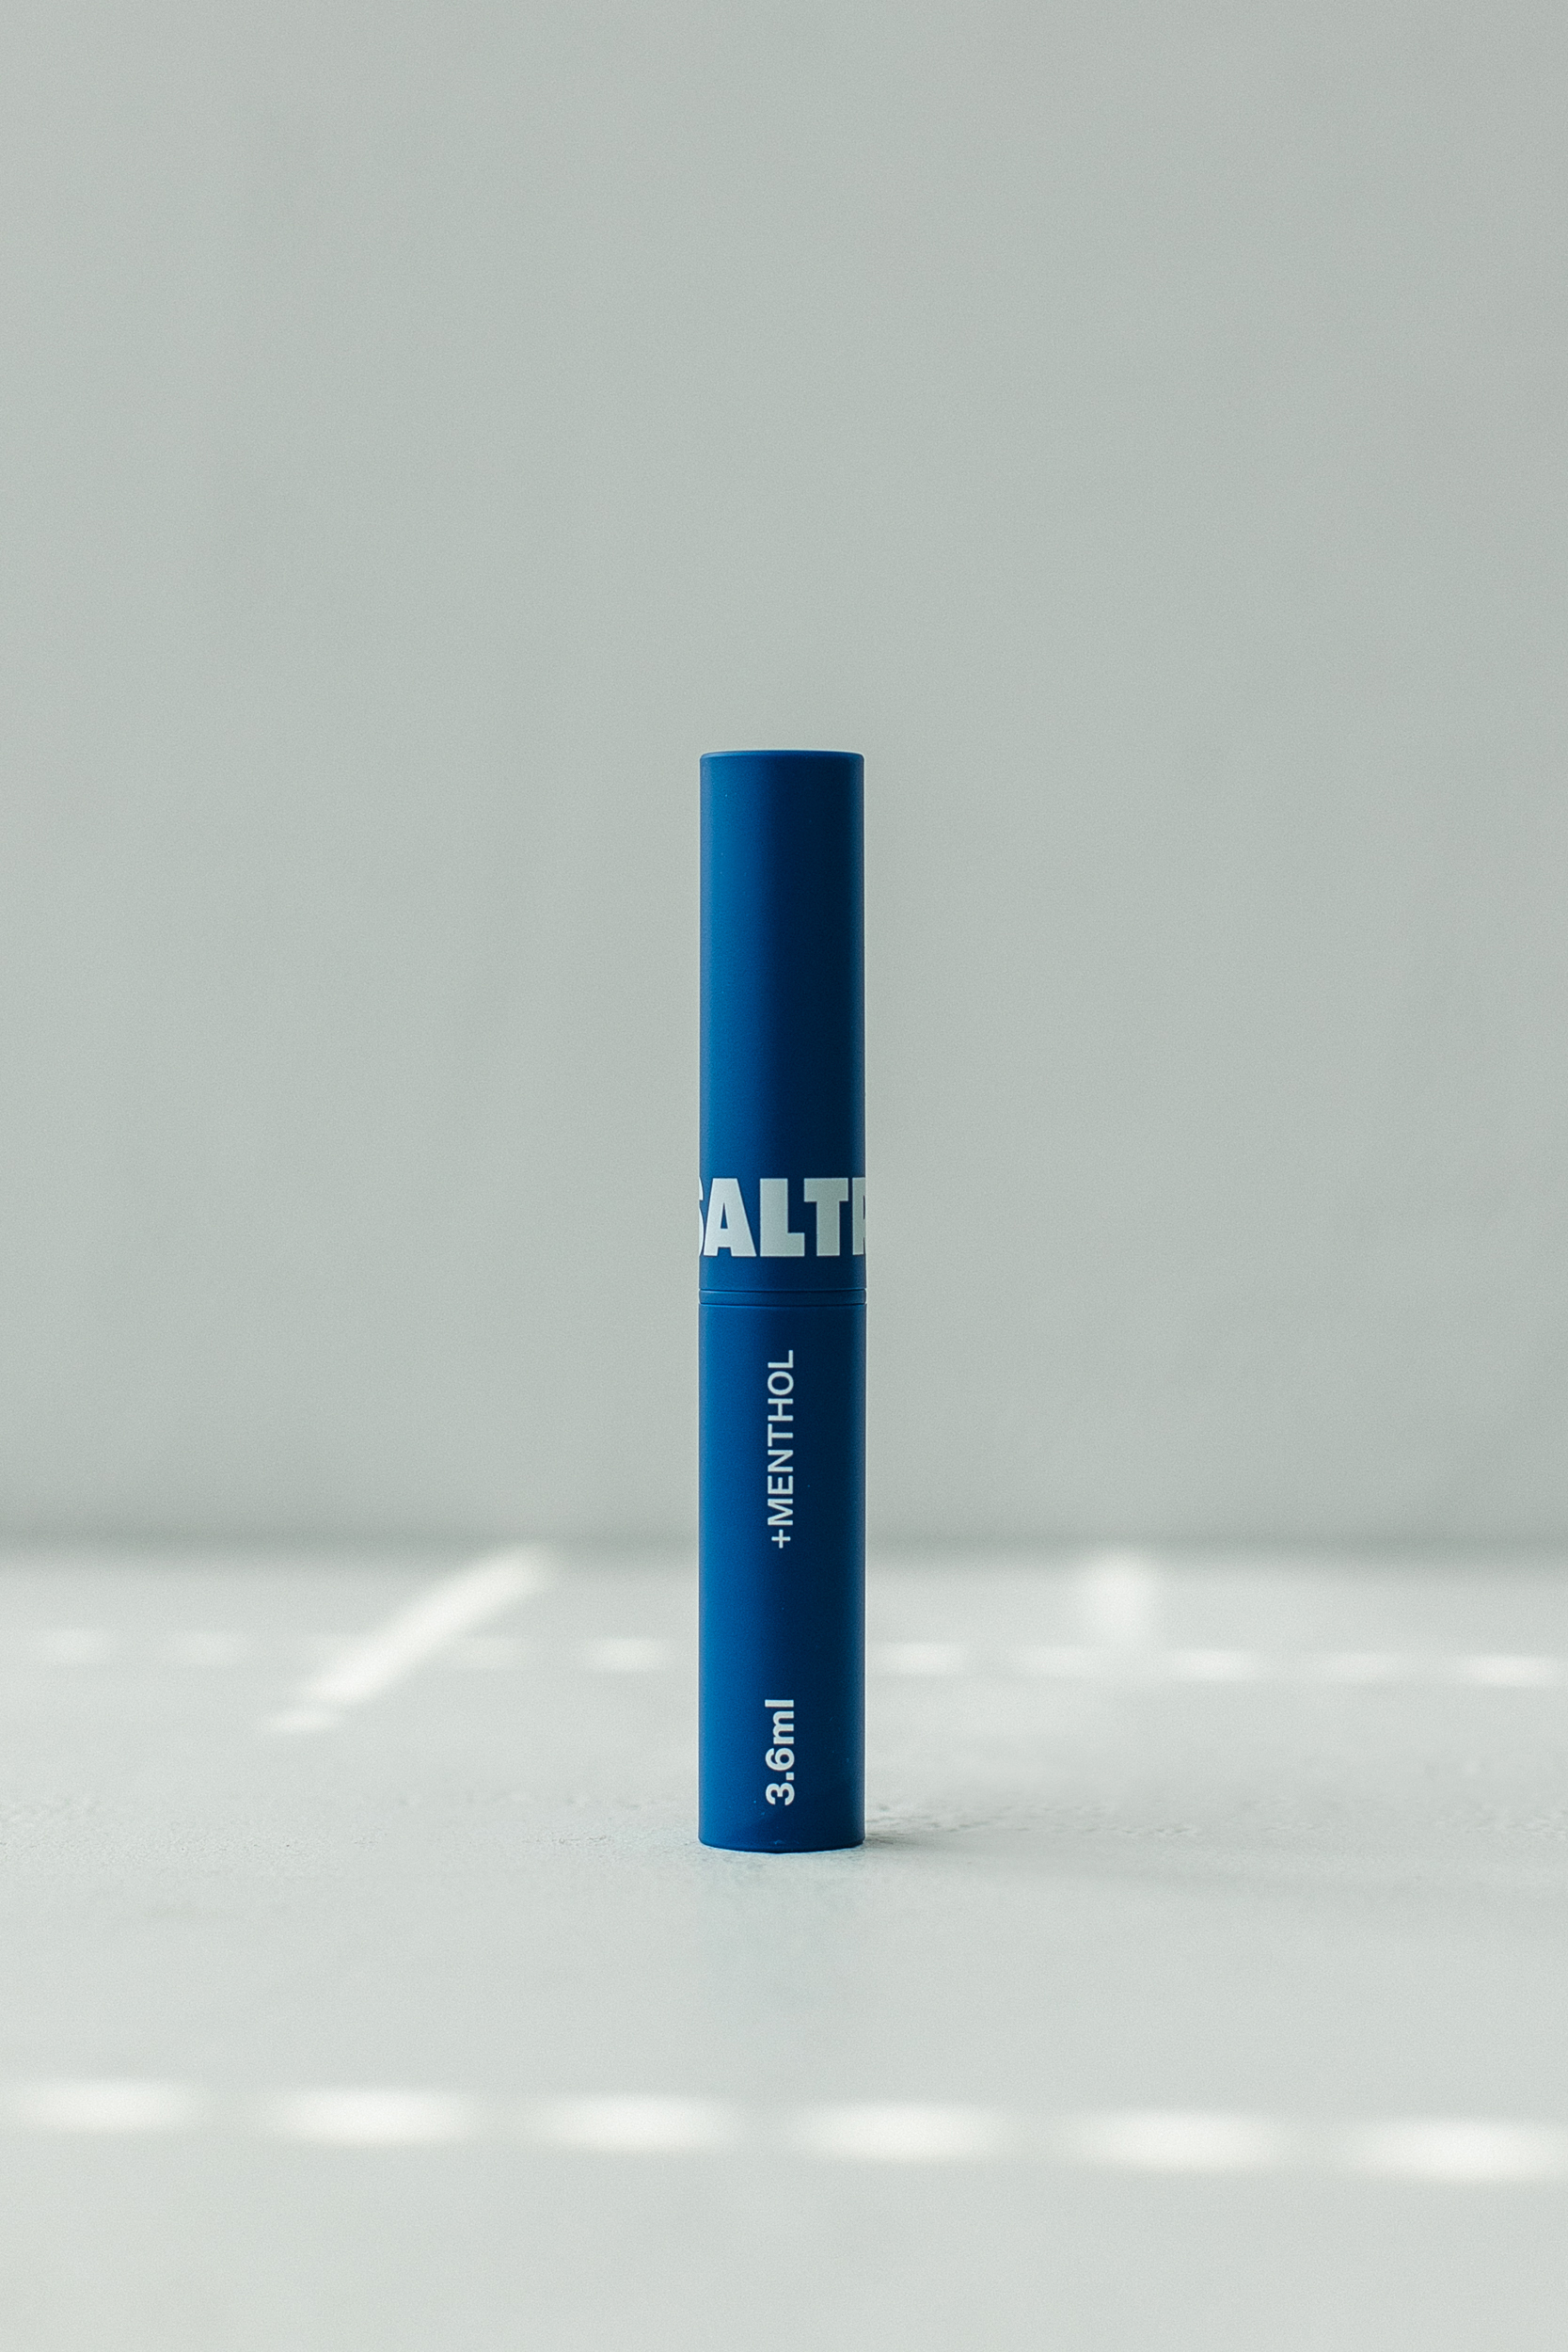 BU// Бальзам для губ с серой солью Ментол SALTRAIN Graysalt Lip Balm - Menthol 3,6ml